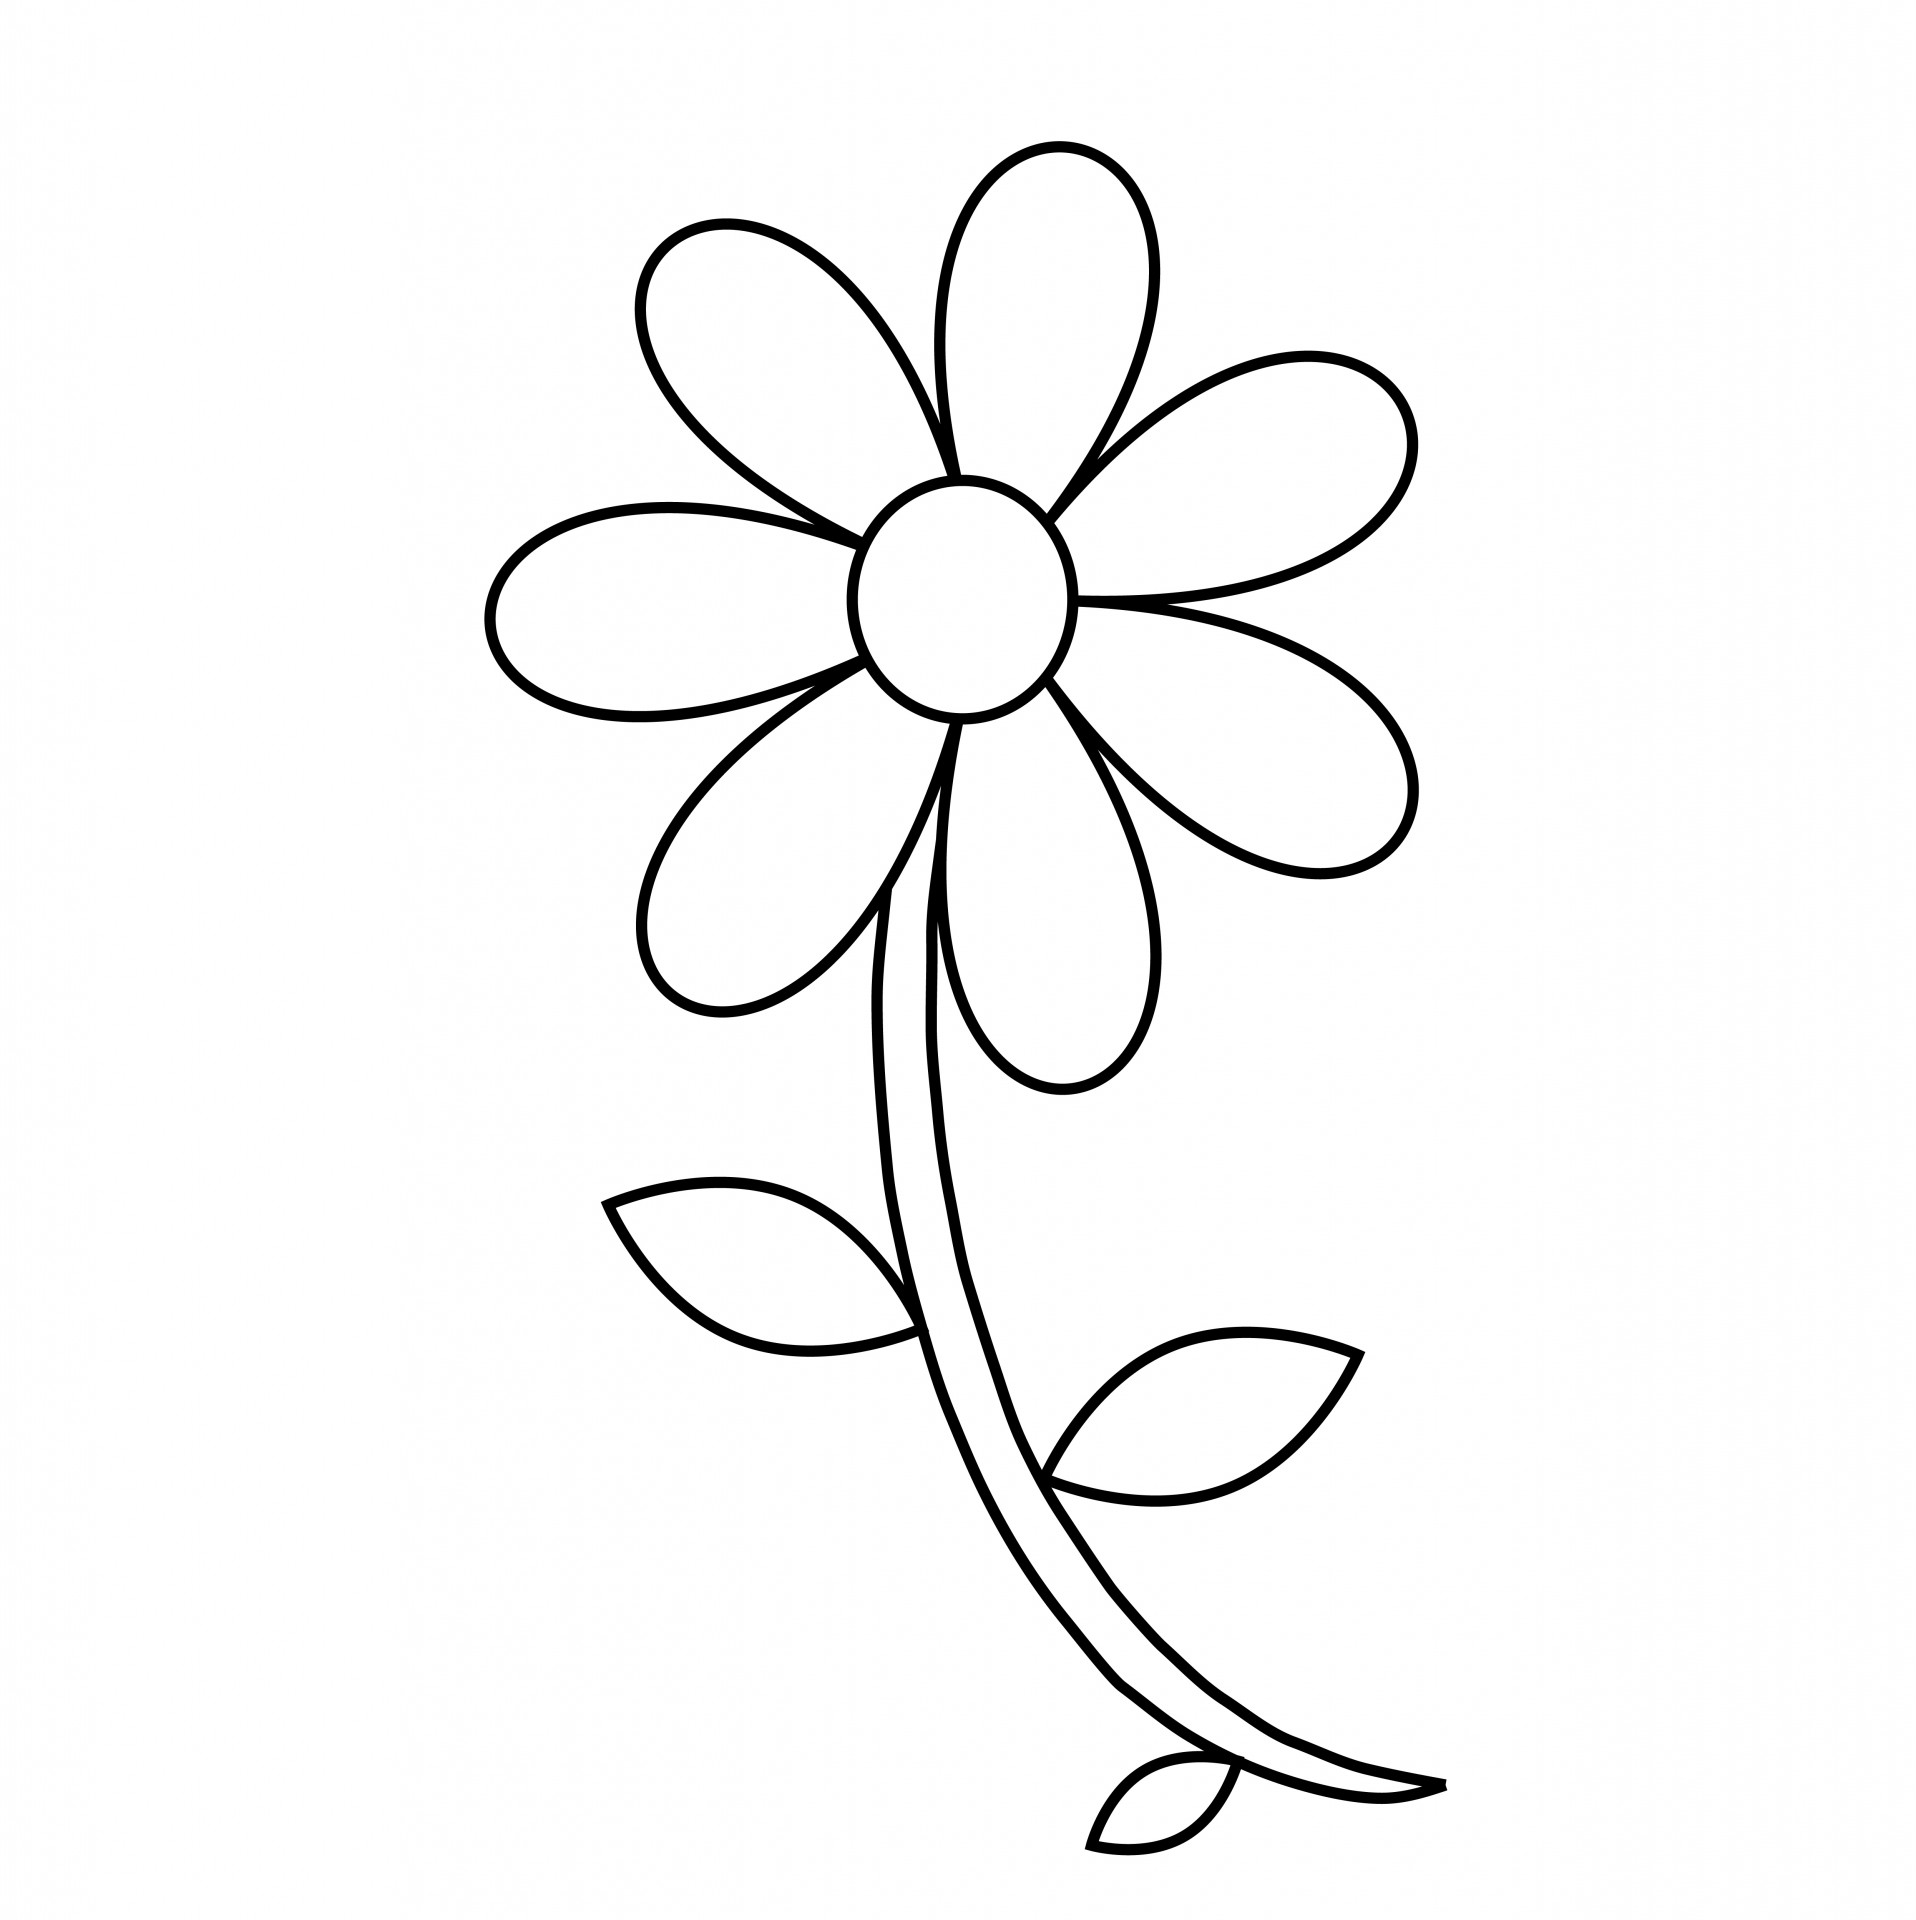 Cartoon flower outline